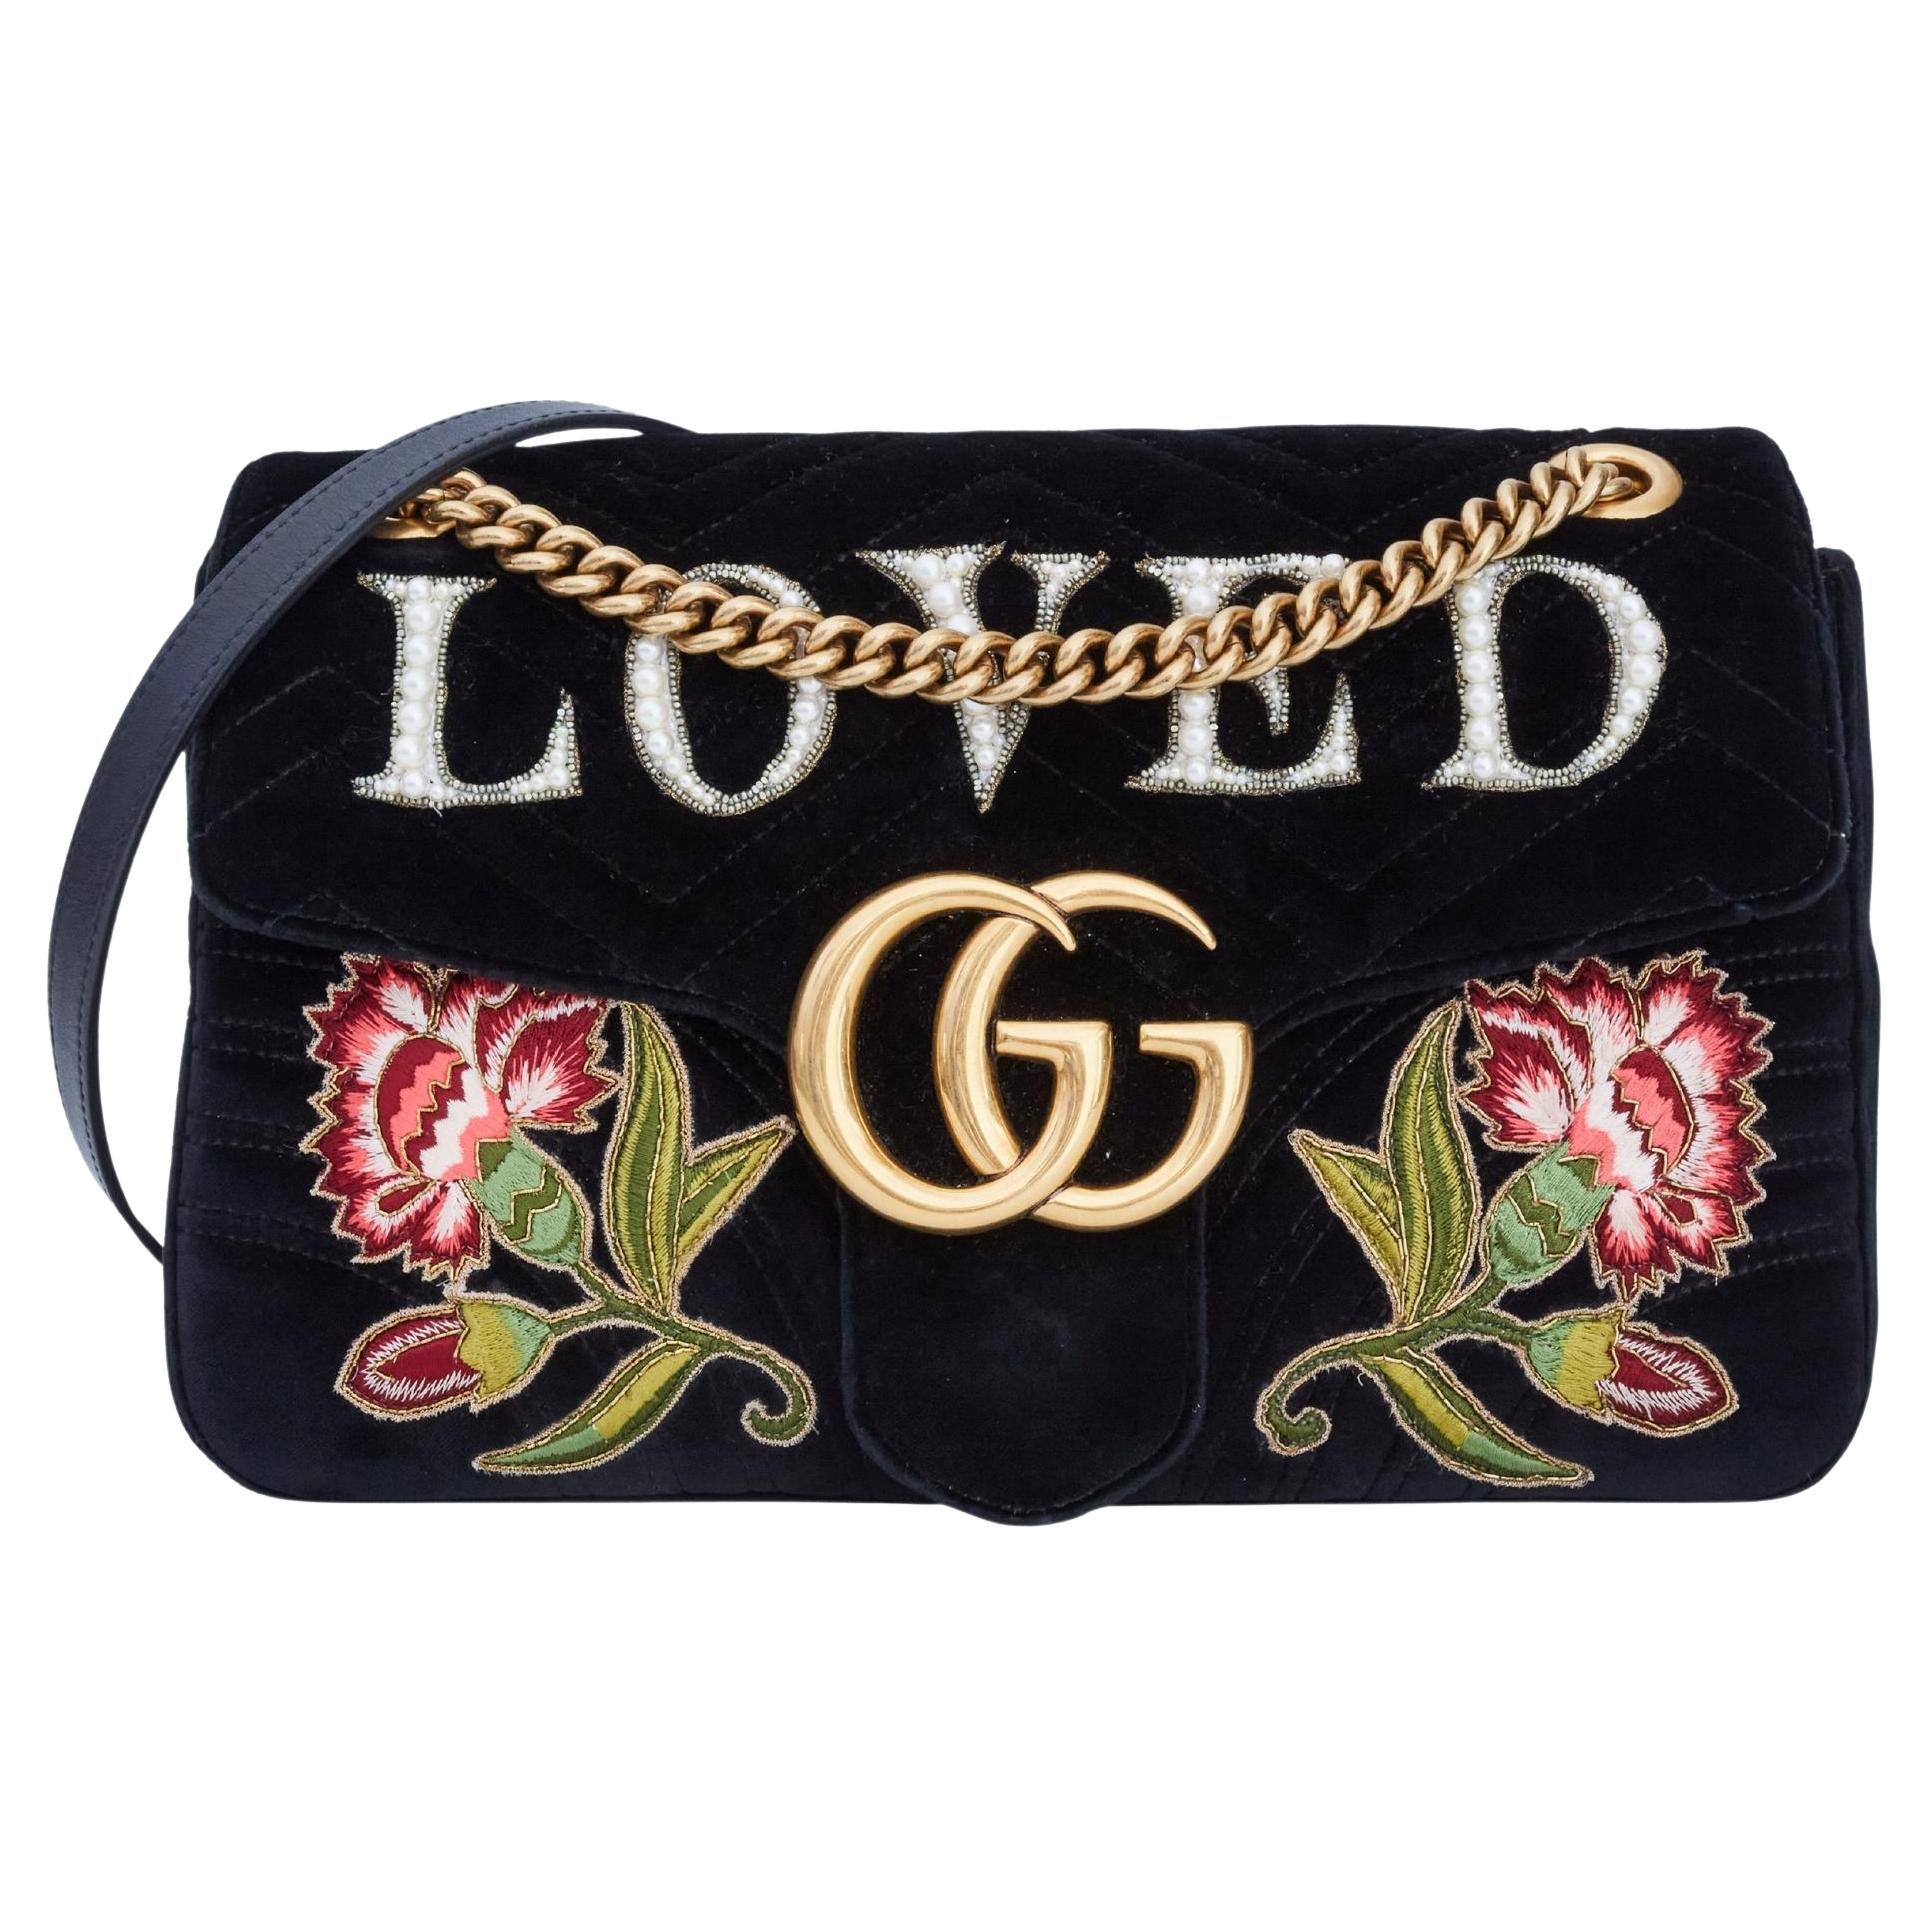 Gucci red velvet marmont bag ALL0353 – LuxuryPromise